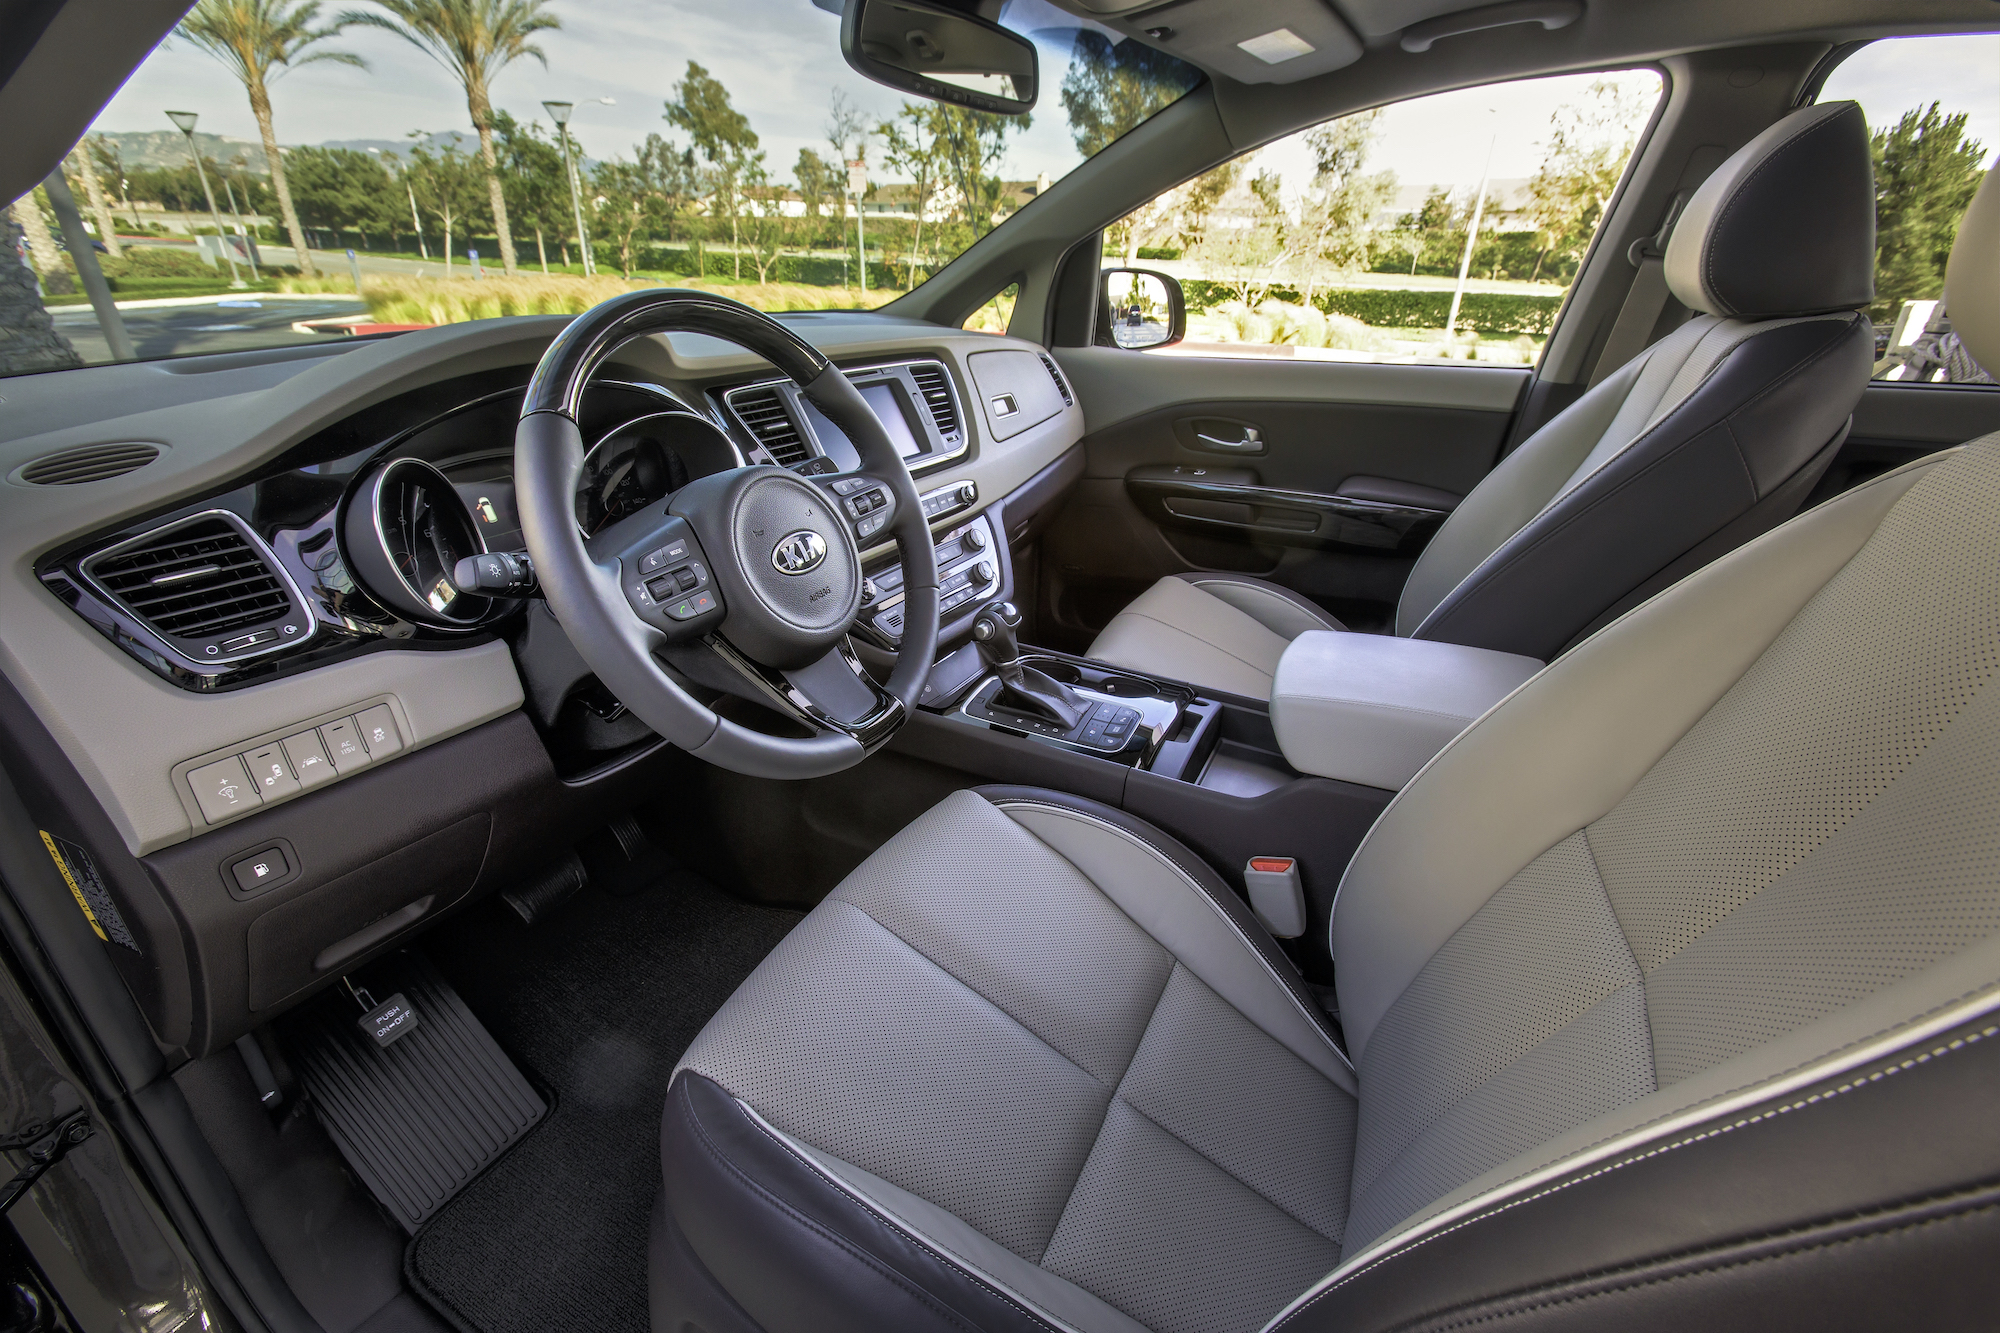 The light-gray front seats, steering wheel, and dashboard of a 2016 Kia Sedona minivan